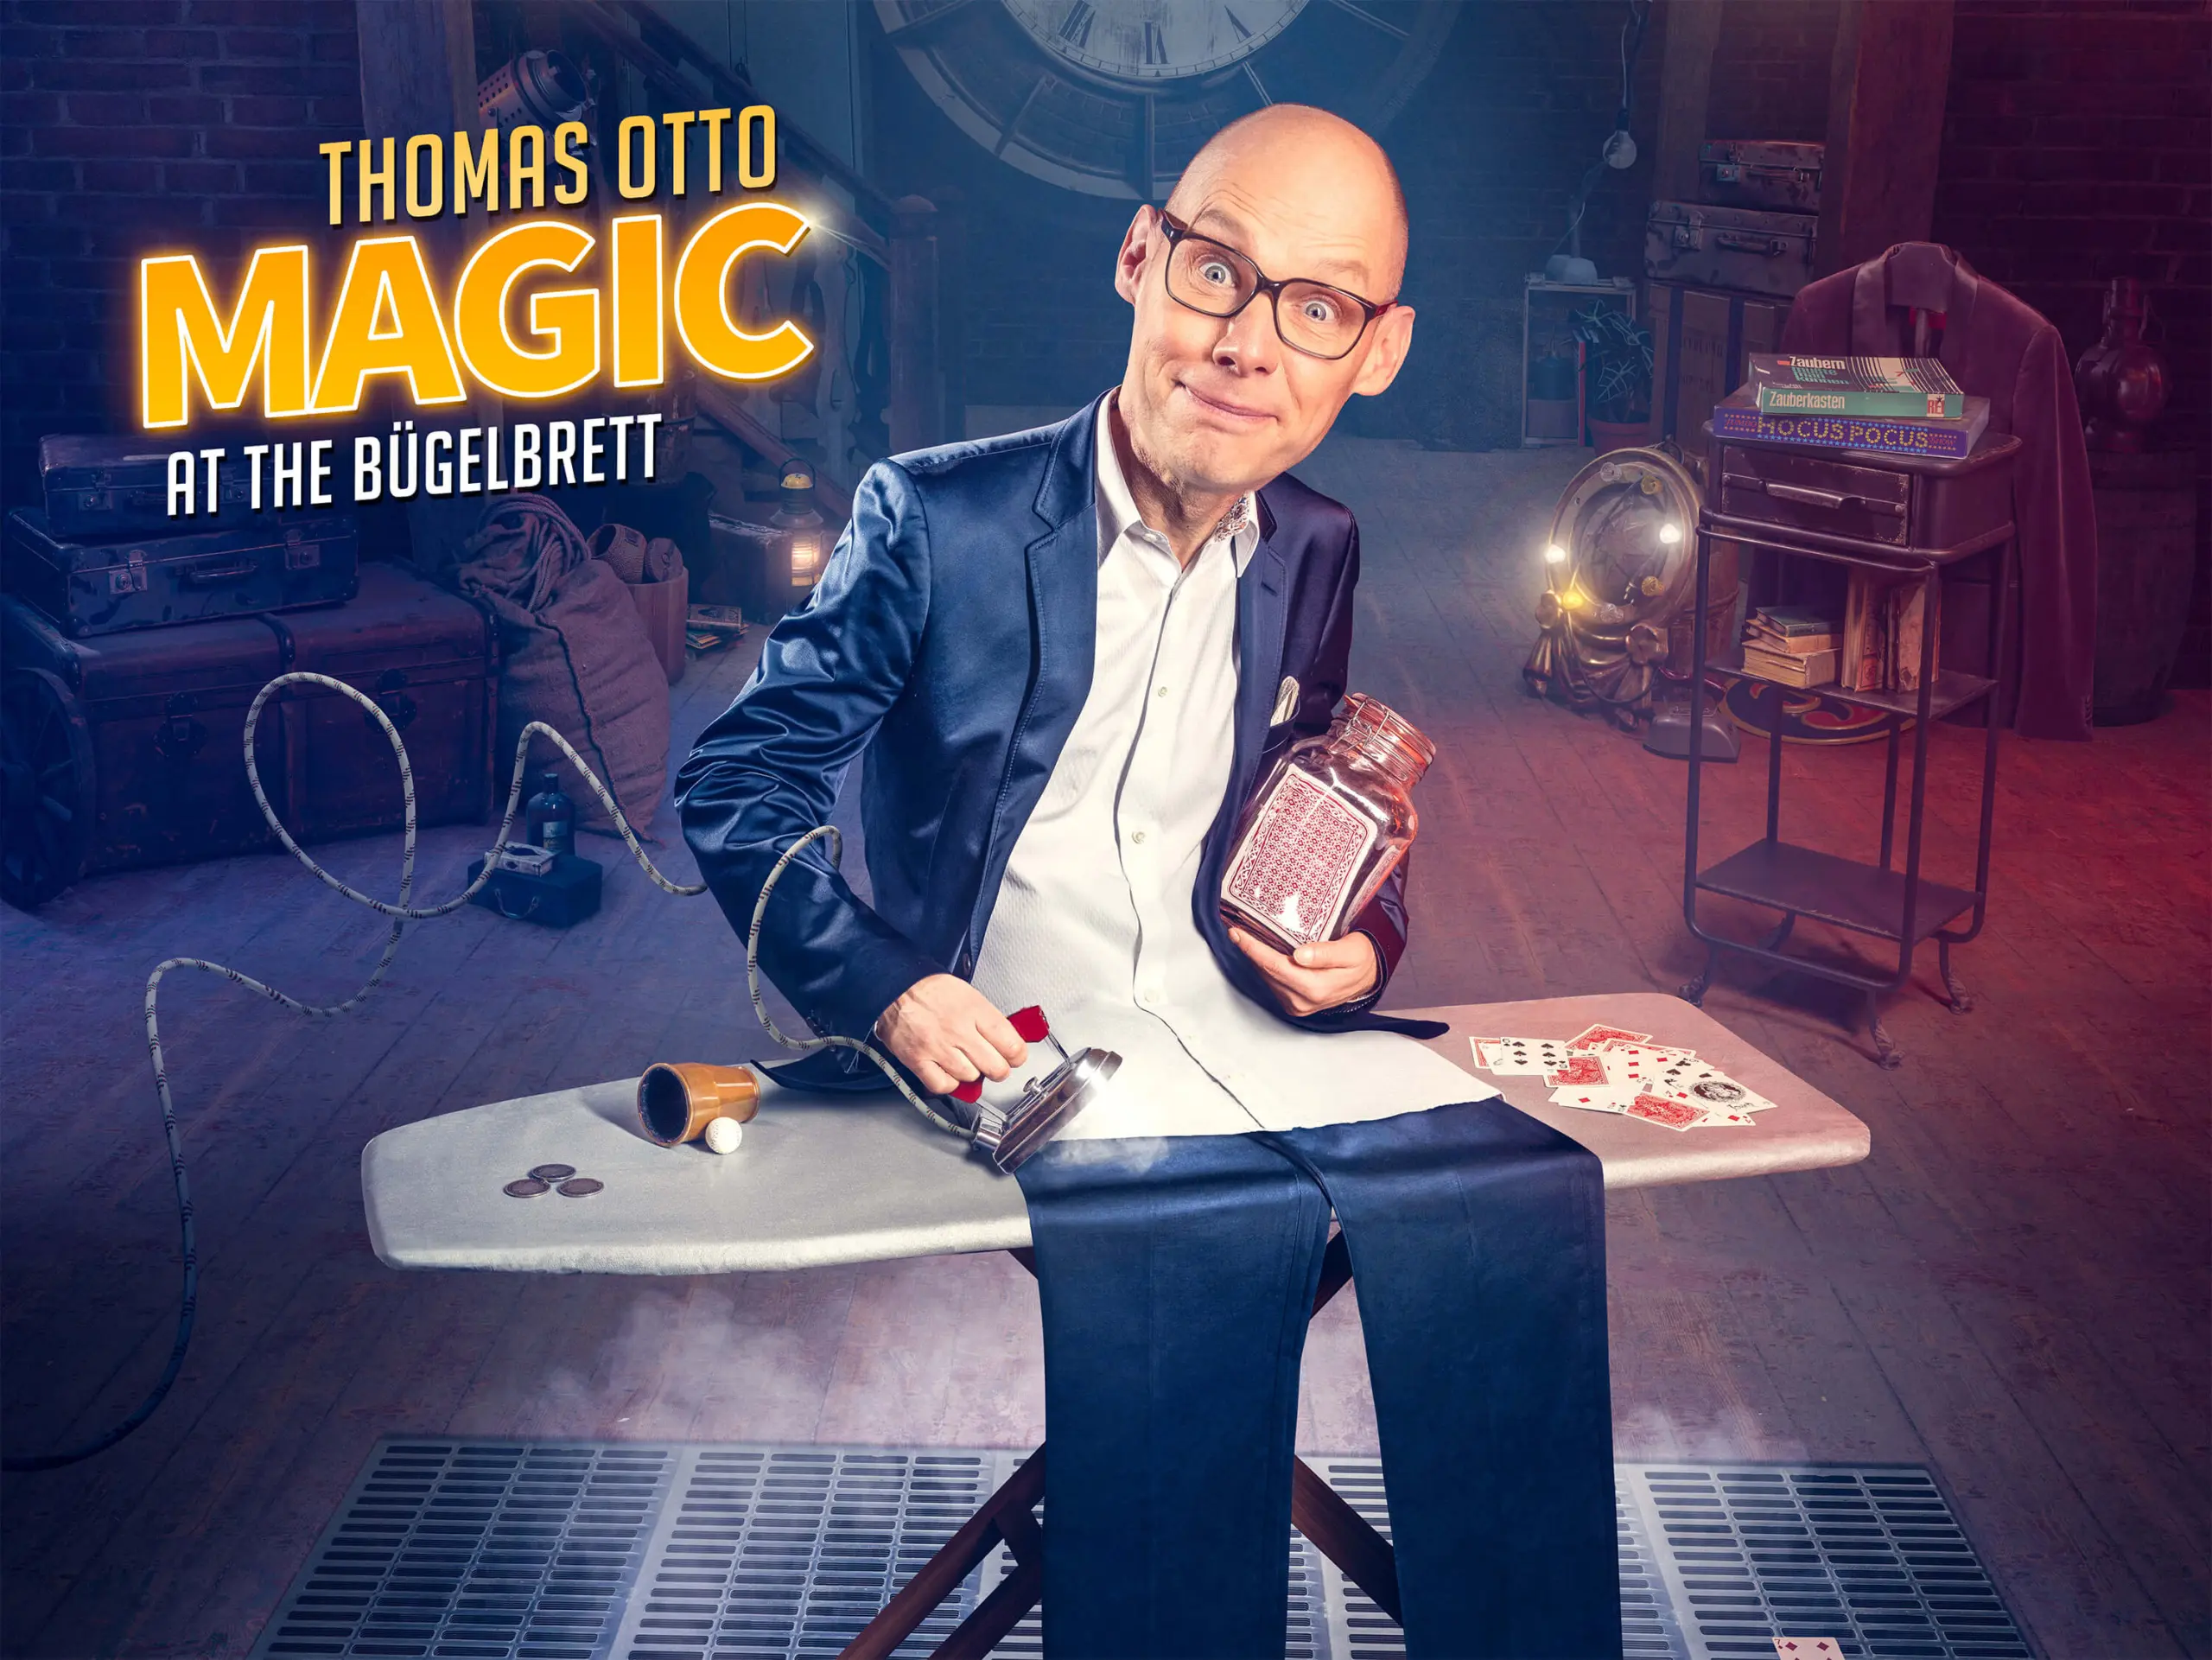 Thomas Otto - Magic at the Bügelbrett - Fotograf: Lauktien & friends